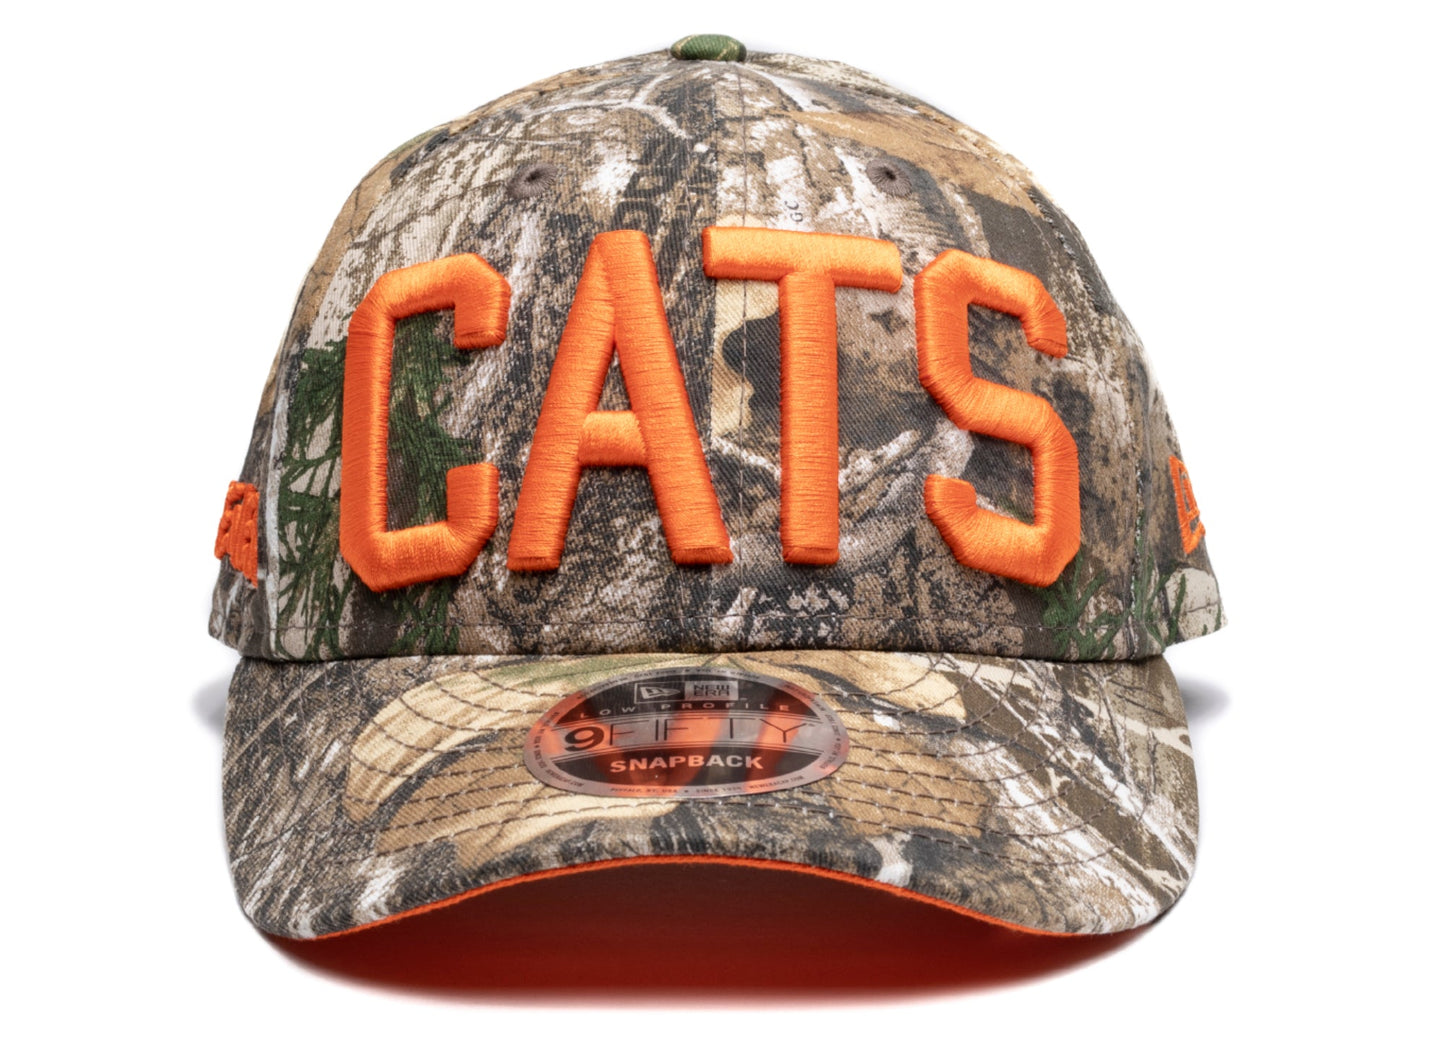 Oneness x New Era Snapback CATS Hat in Real Tree Camo